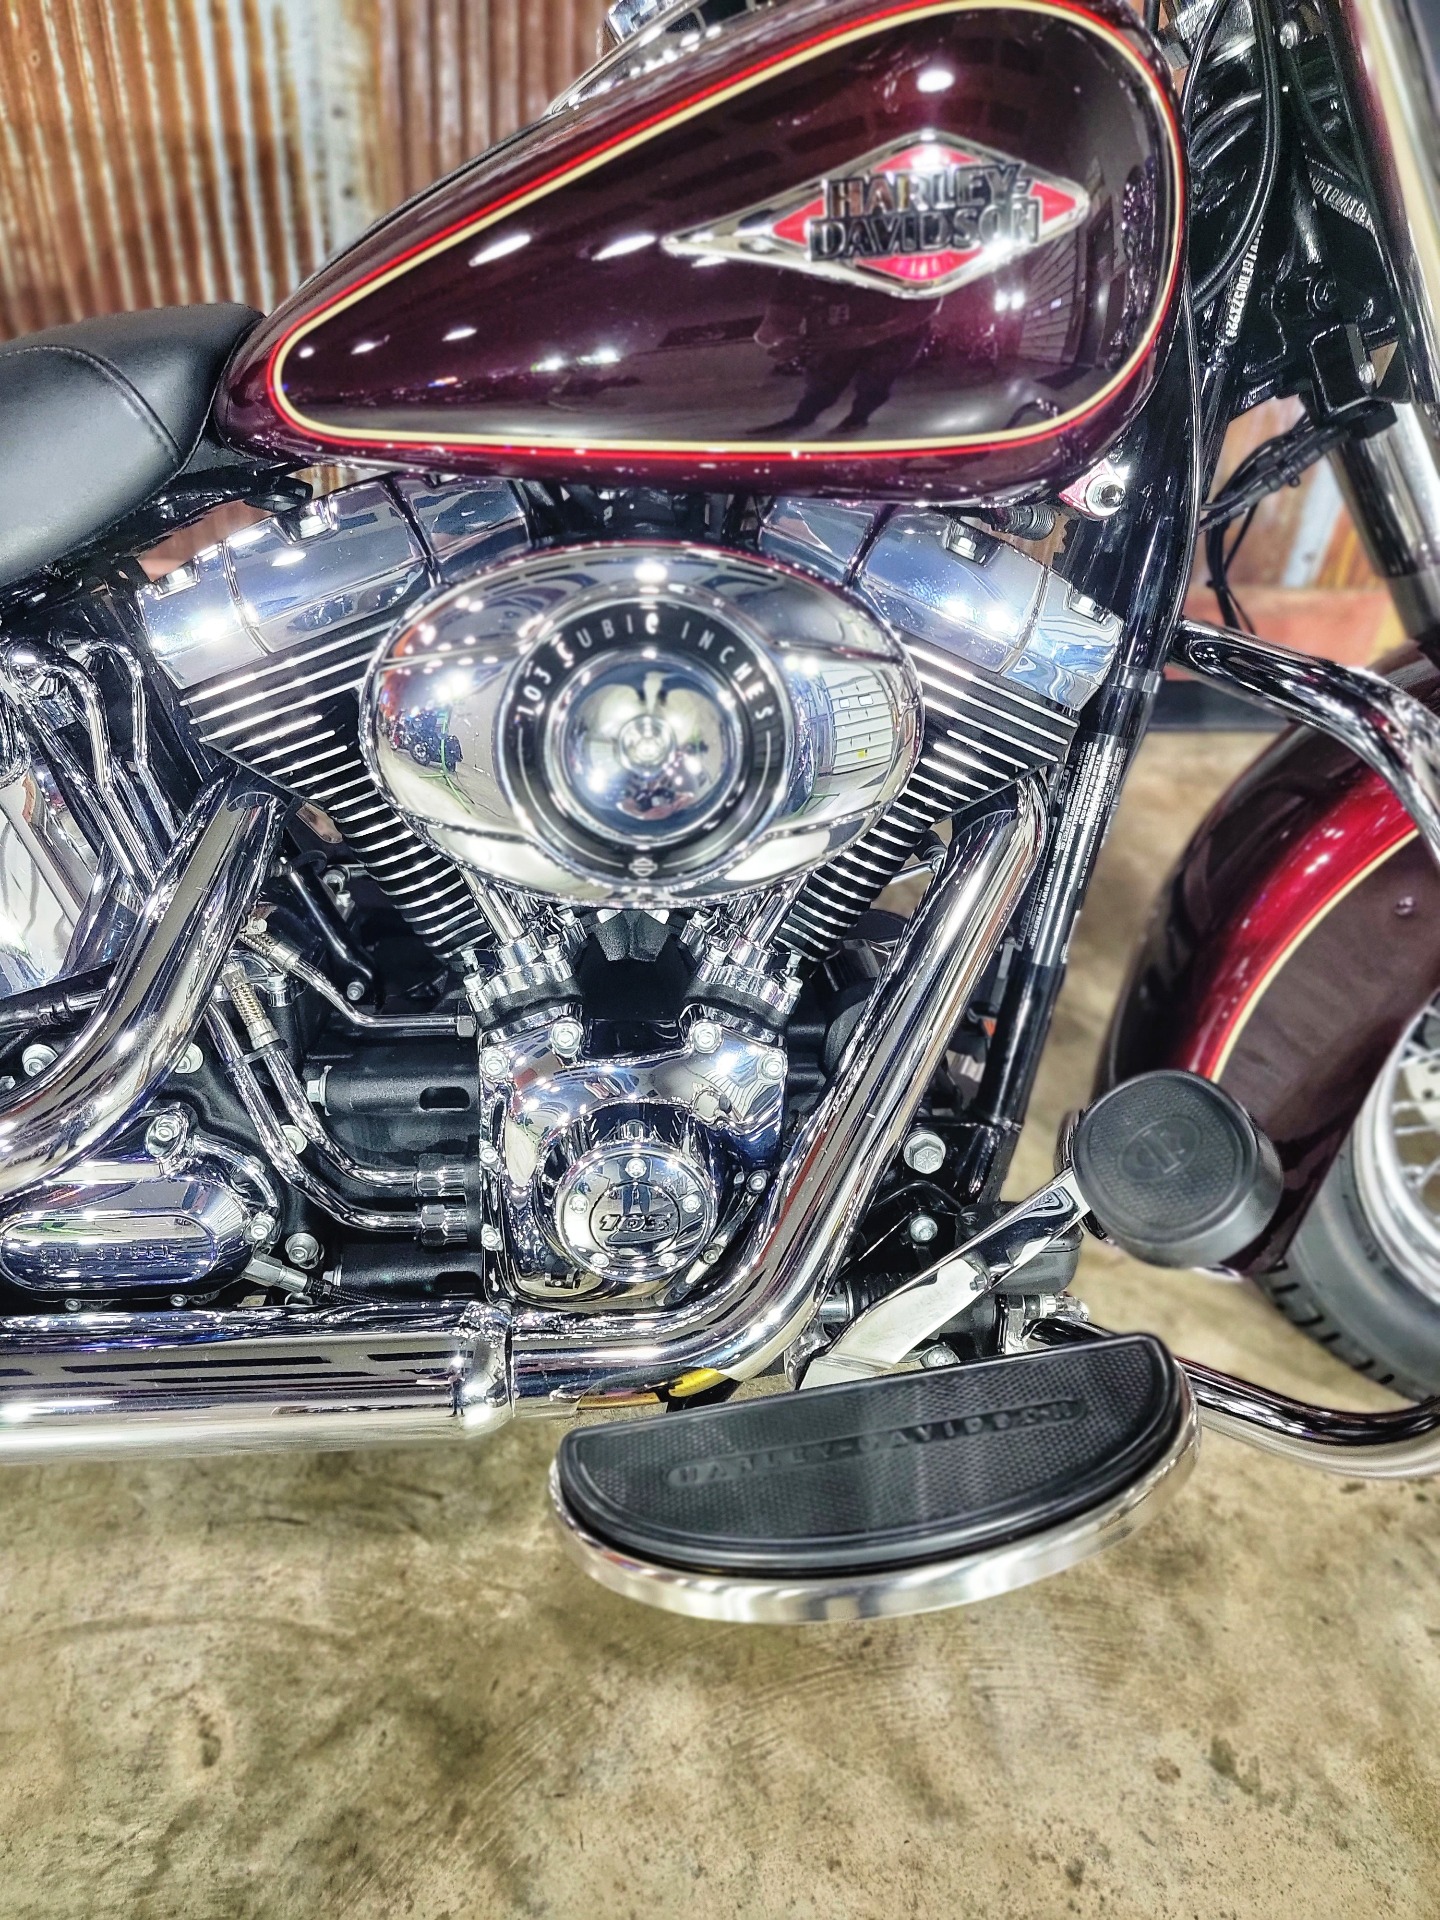 2015 Harley-Davidson Heritage Softail® Classic in Chippewa Falls, Wisconsin - Photo 11